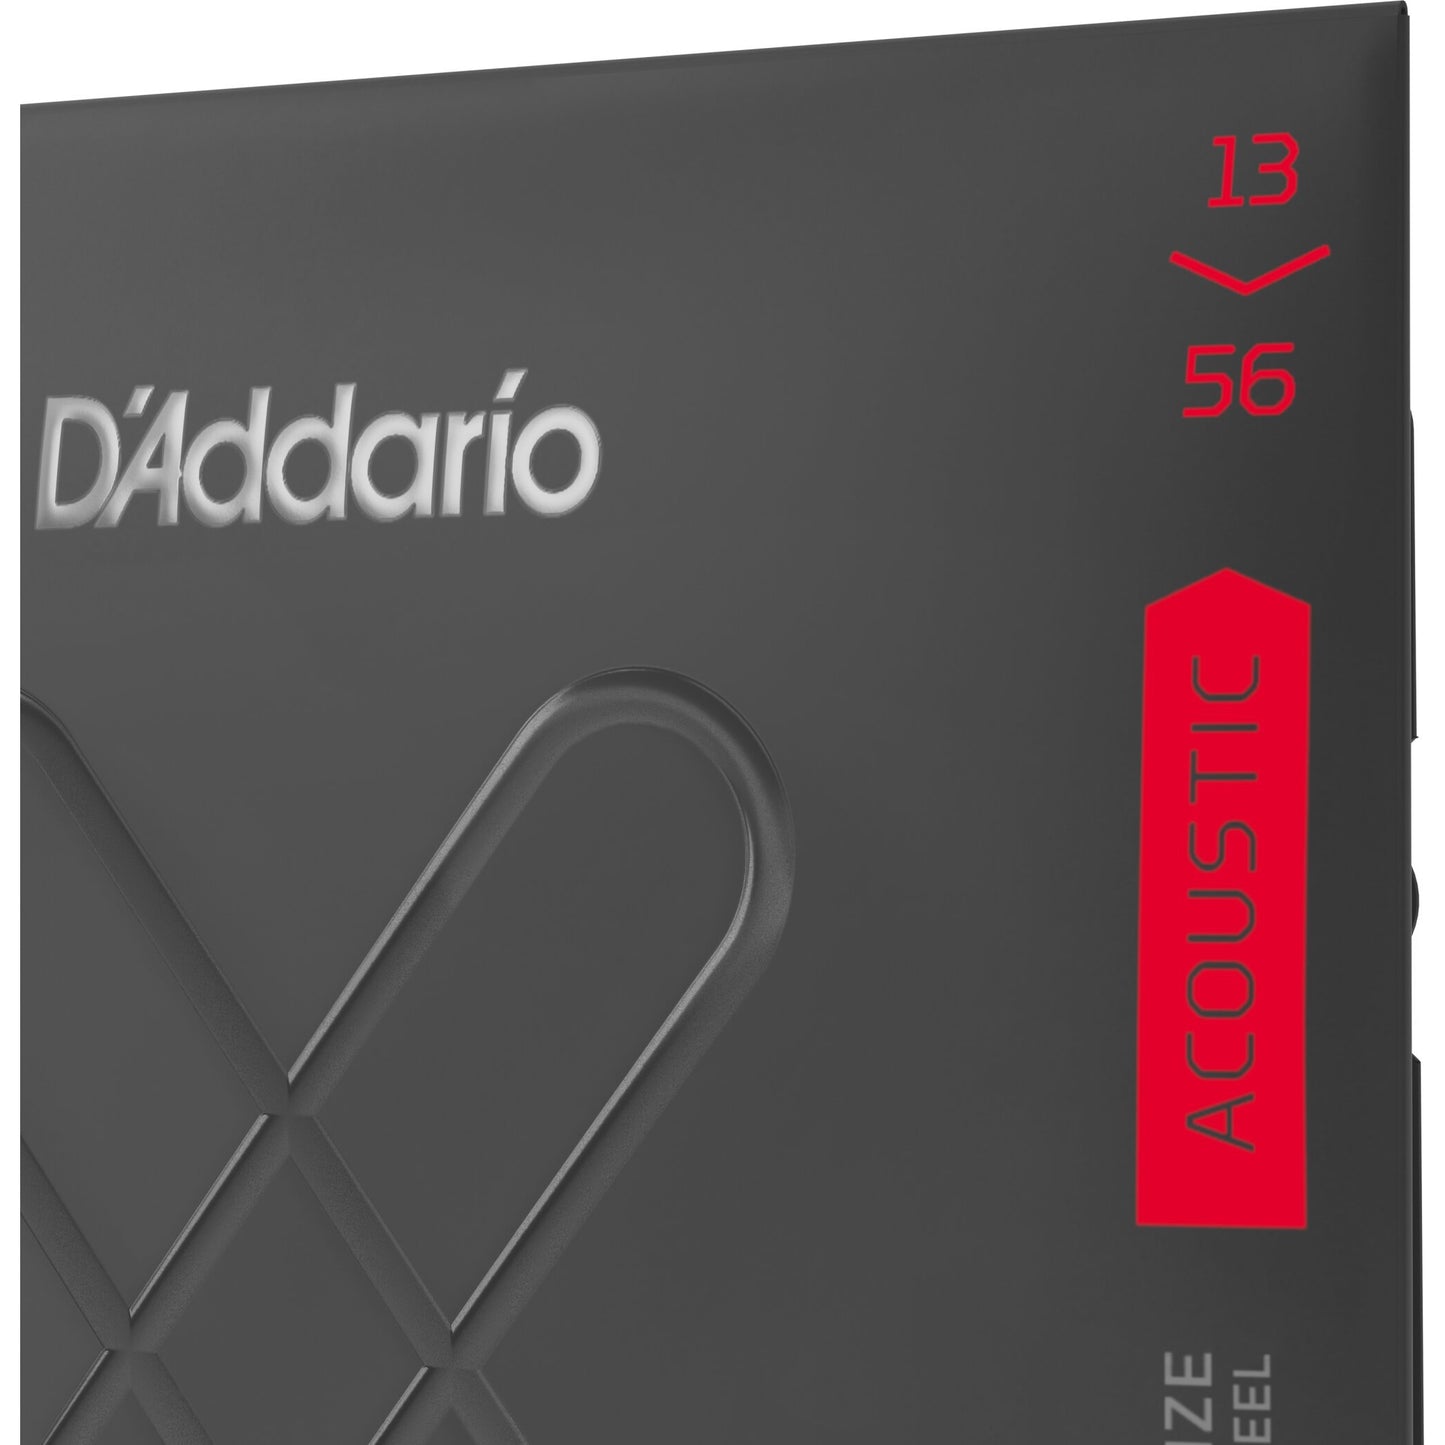 D'Addario XTABR1356 Medium 80/20 Bronze Acoustic Guitar Strings